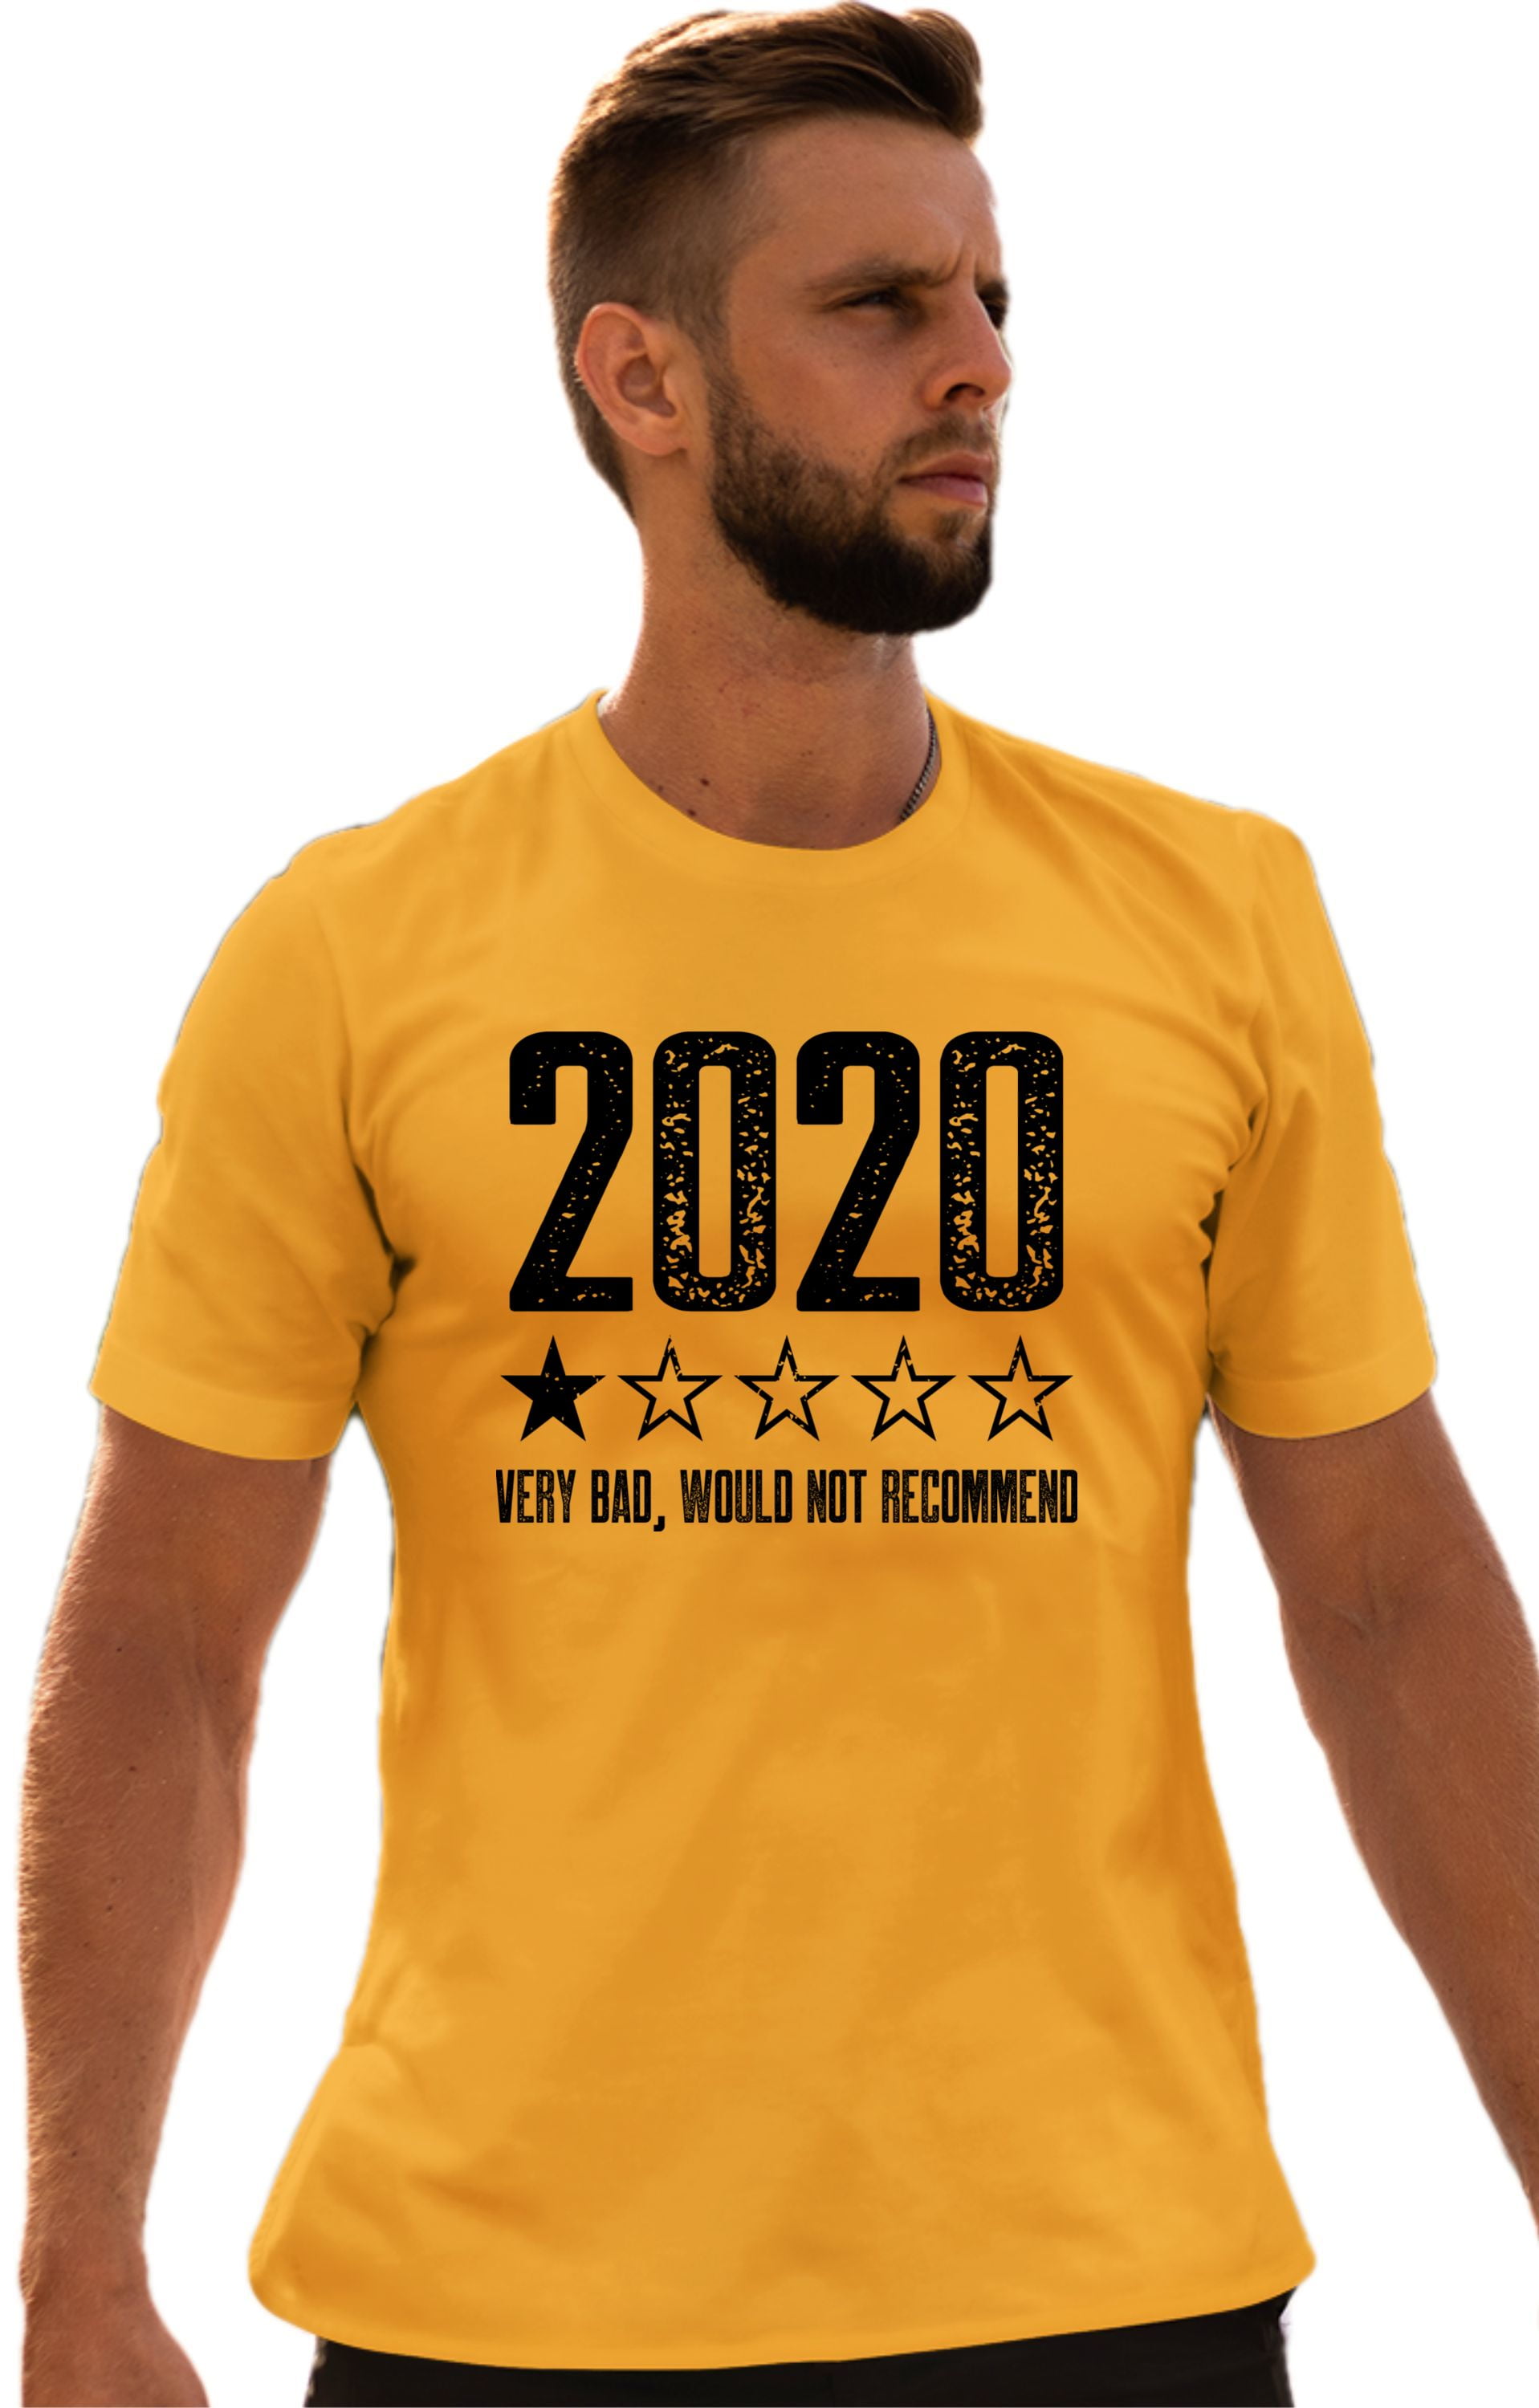 2020 review shirt Women's 2020 review Racerback Tank 2020 review tank top Bad year shirt